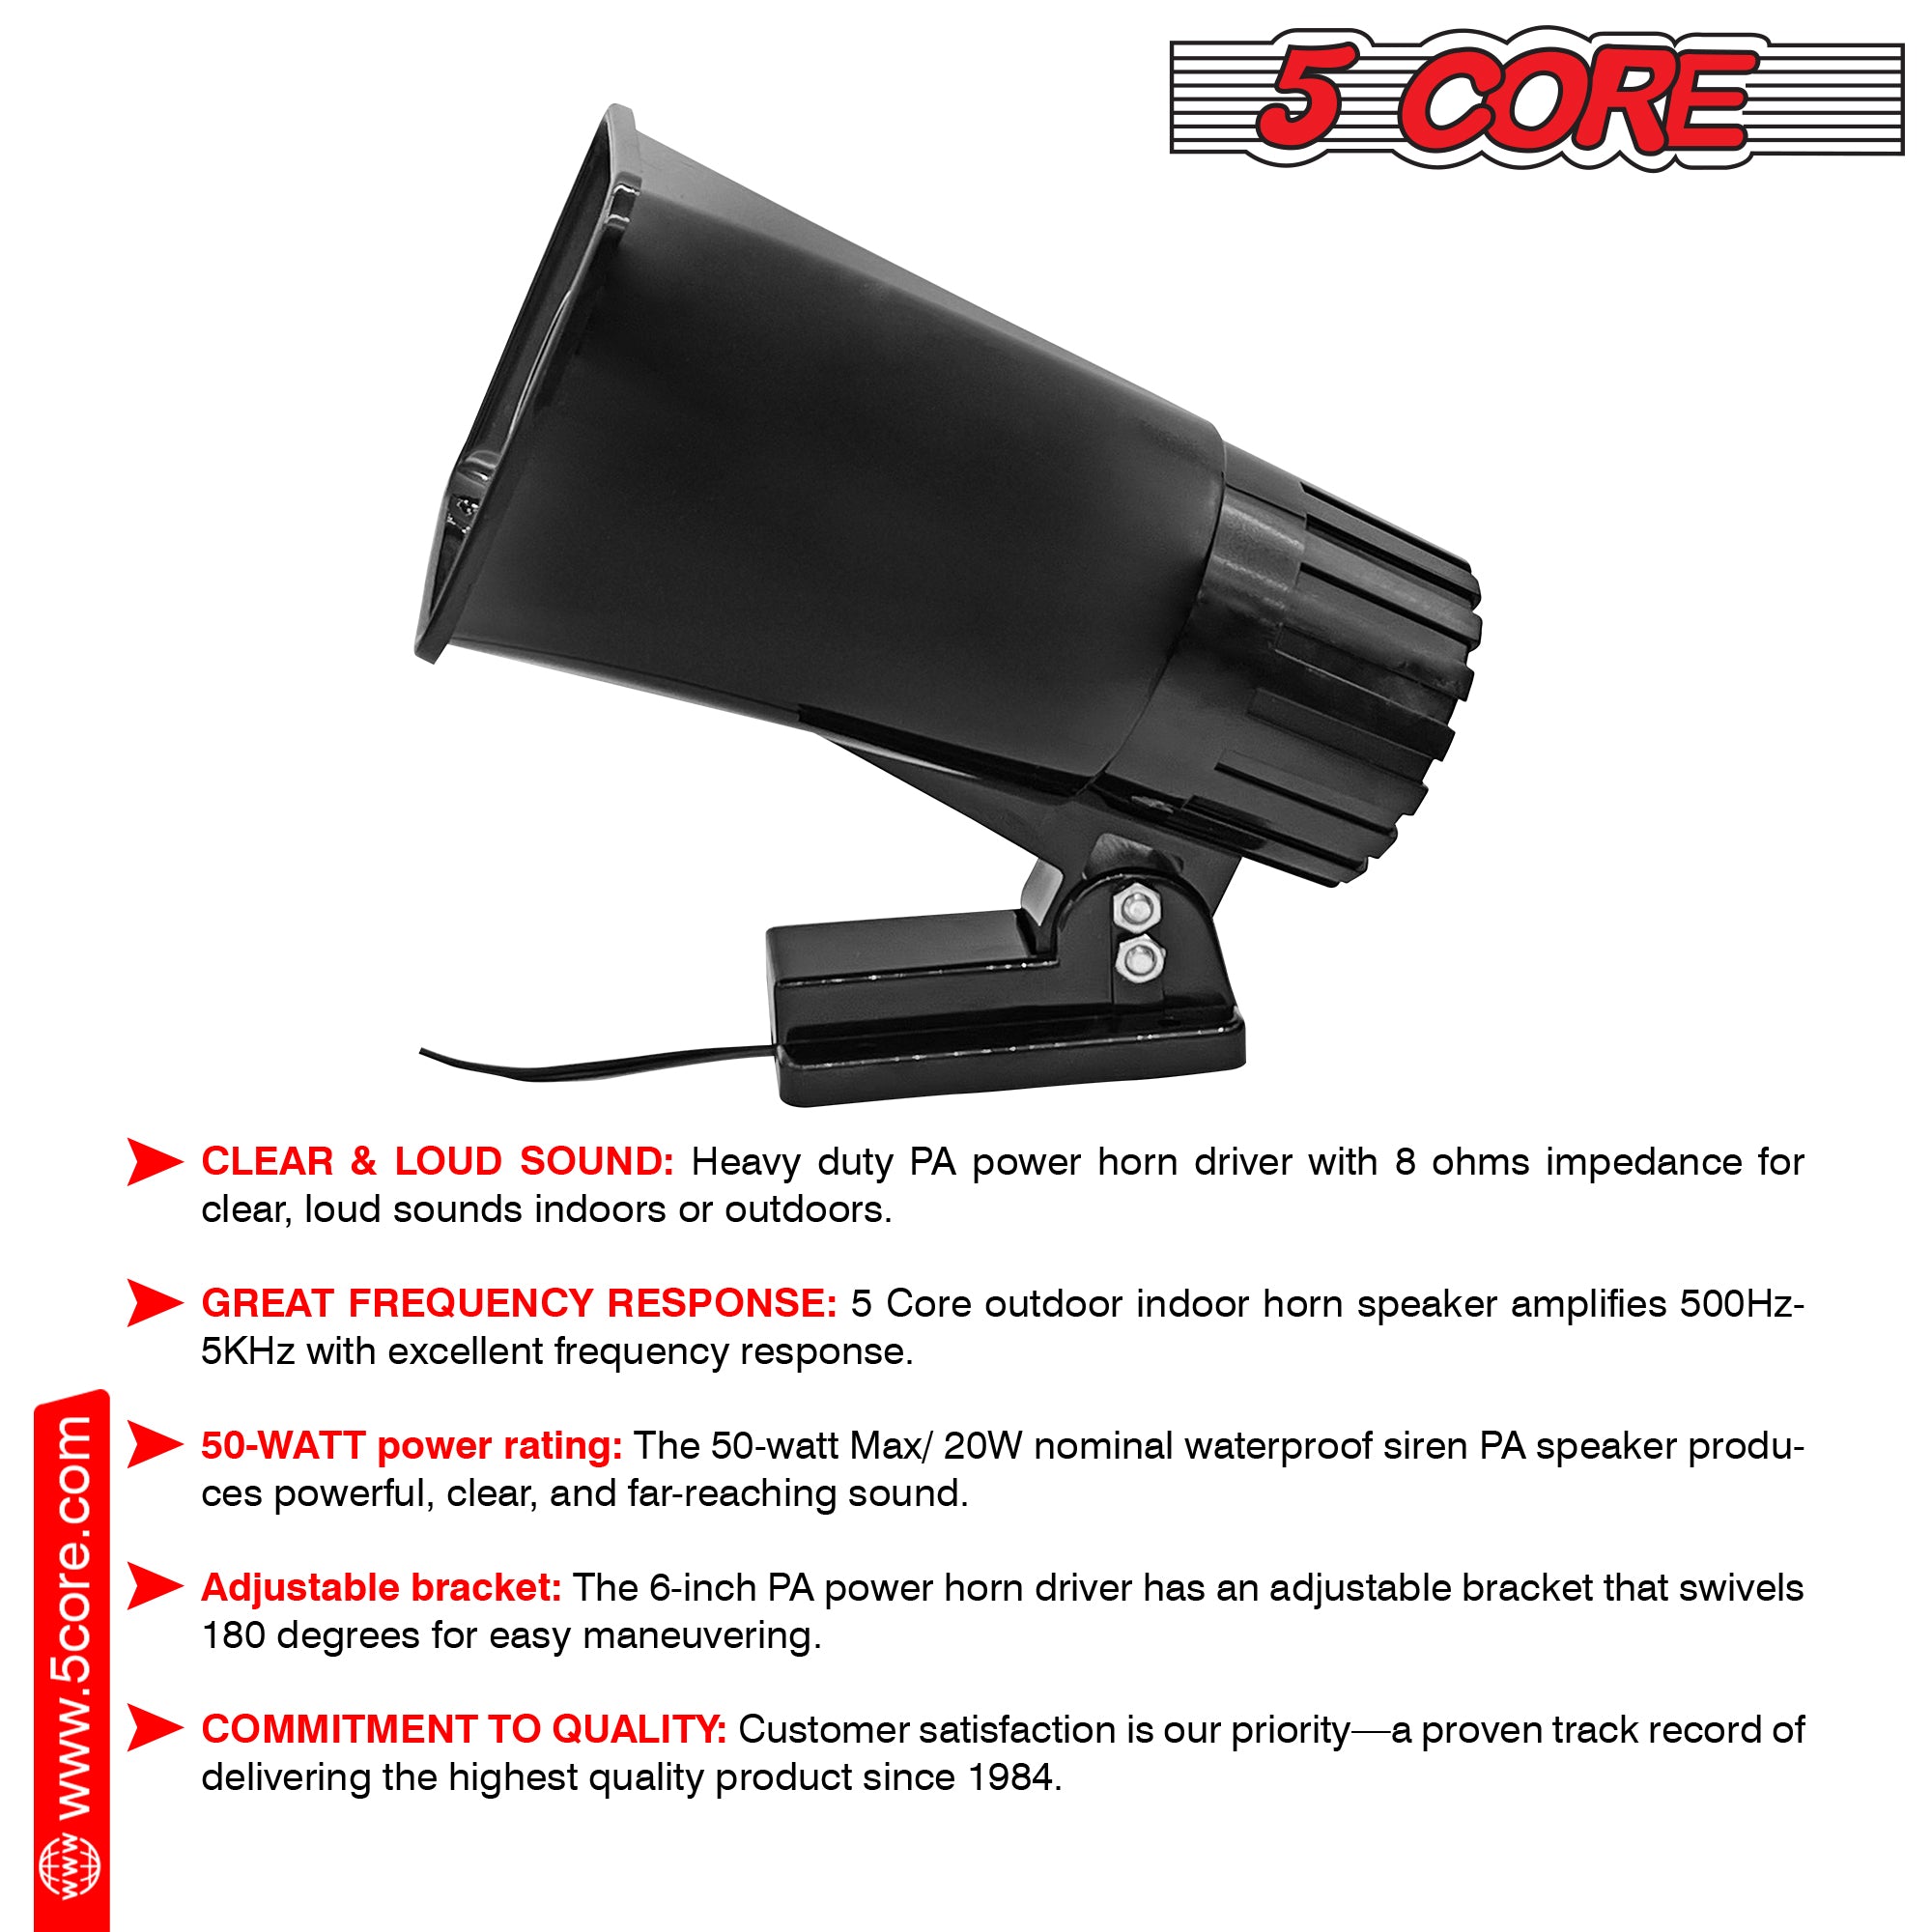 5 Core 6" inch PA Speaker Black/ 20W Power Horn Driver for Indoor Outdoor Use/ Heavy Duty Portable Waterproof Siren PA Speaker with Adjustable Bracket- HW 405 BLK